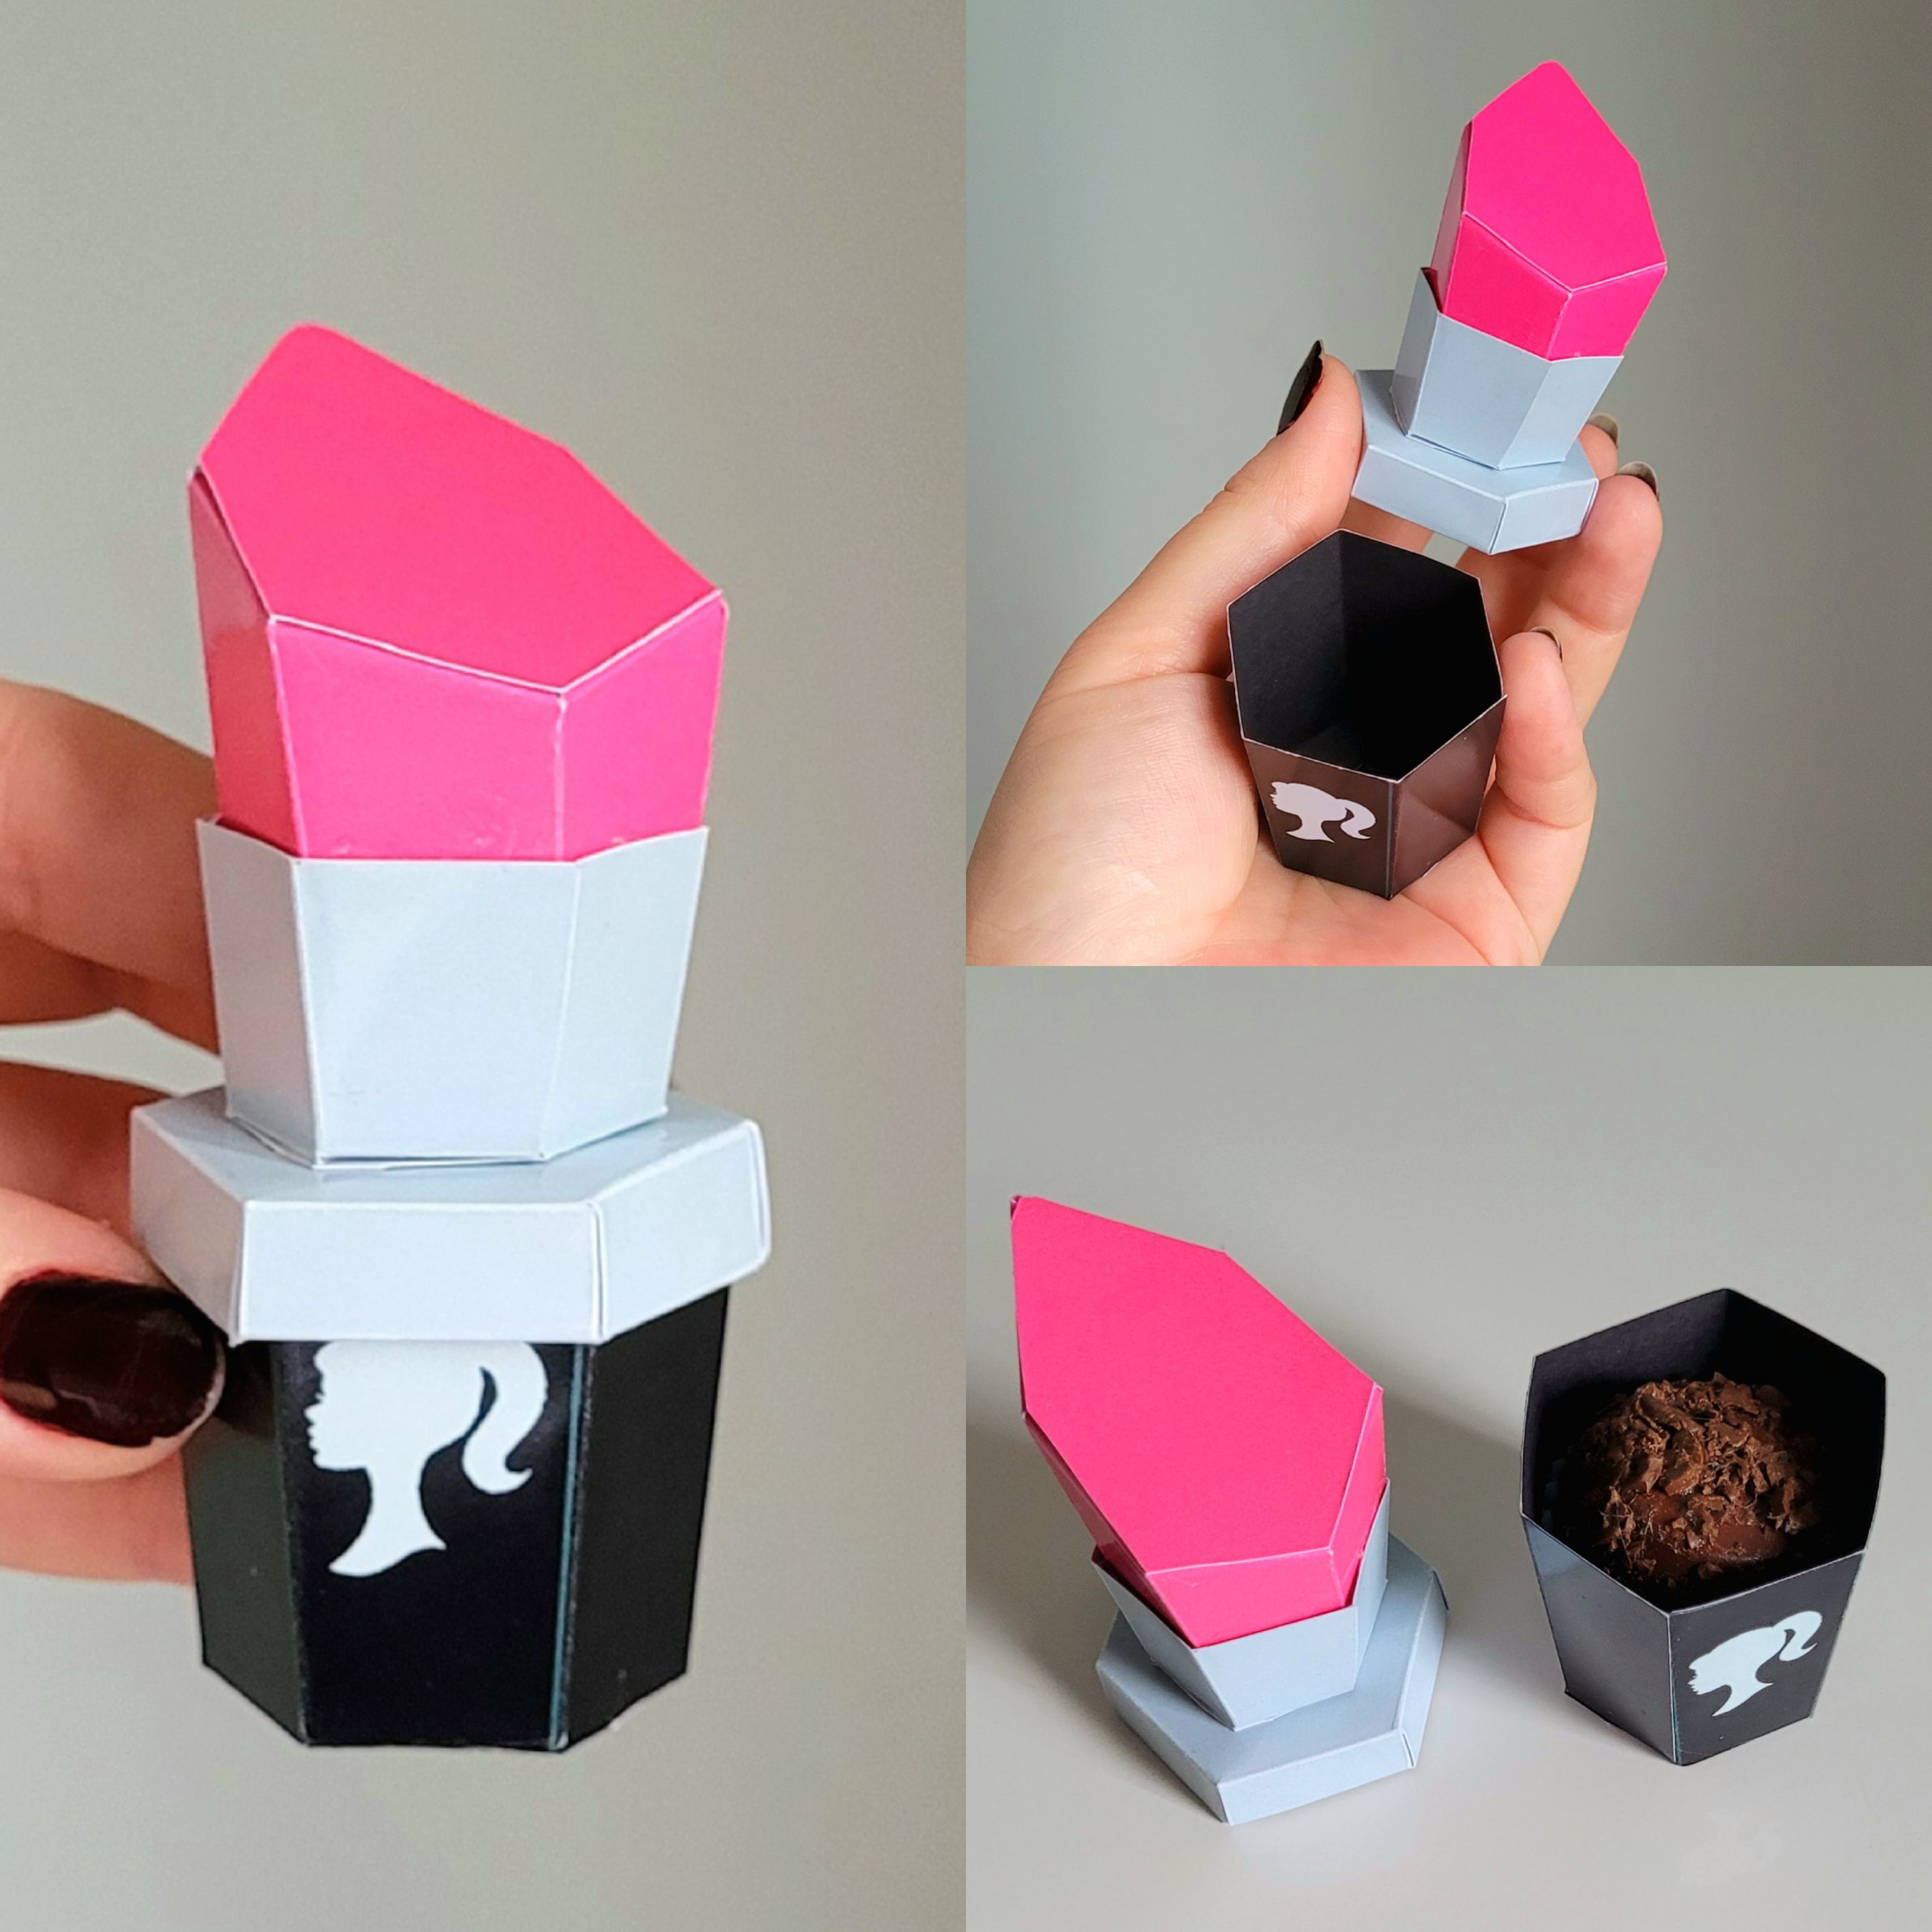 Kit Festa Minecraft para imprimir - OrigamiAmi - Arte para toda a festa